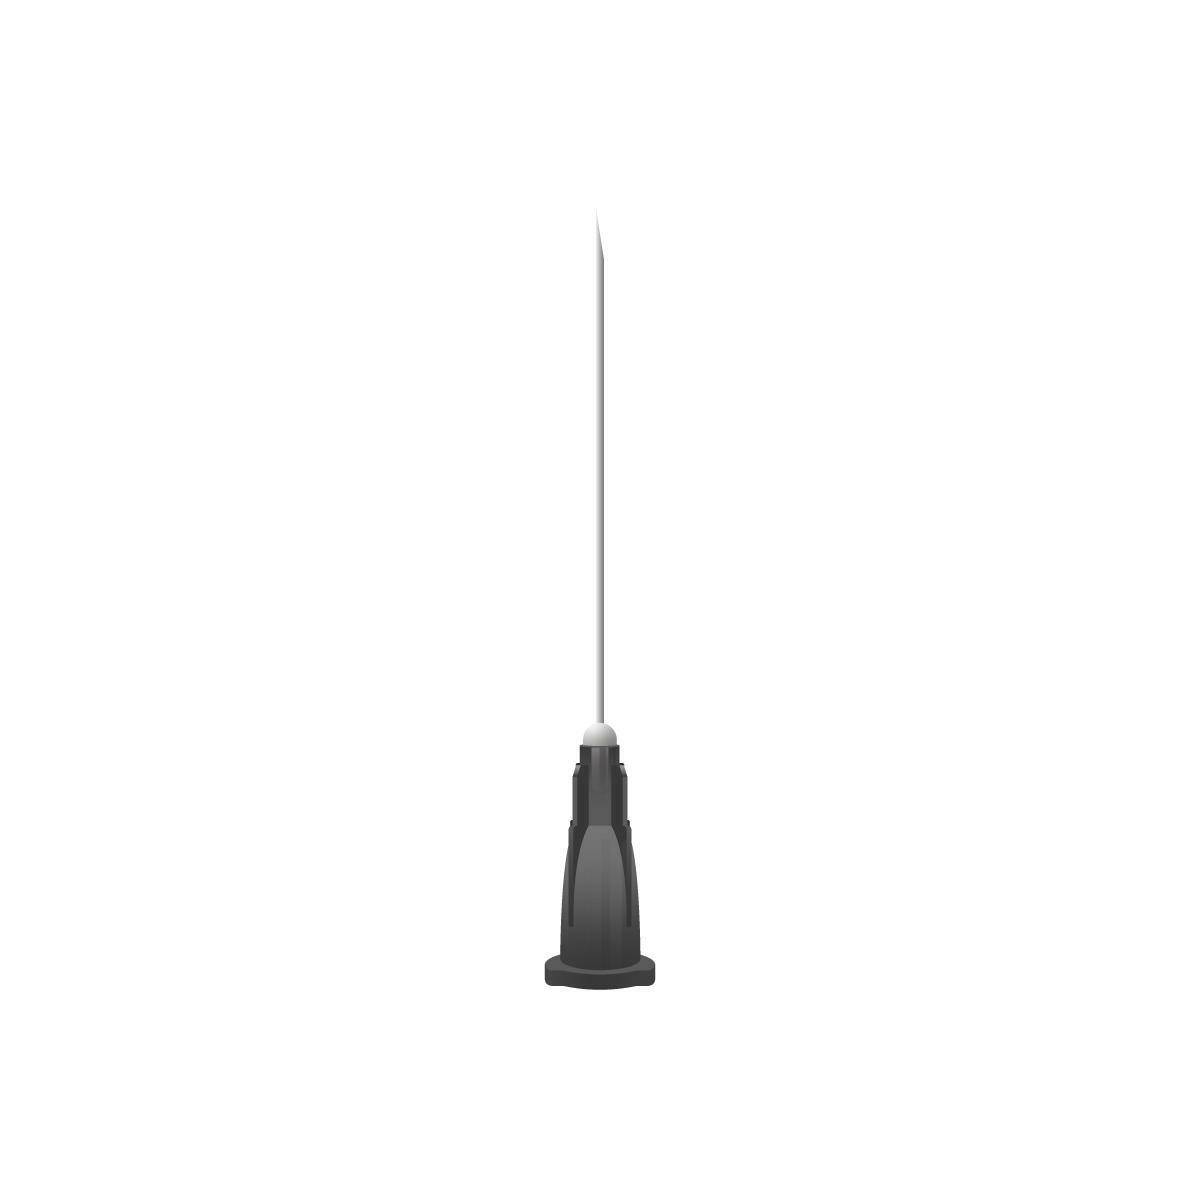 22g Black 1.5 inch Terumo Needles - UKMEDI